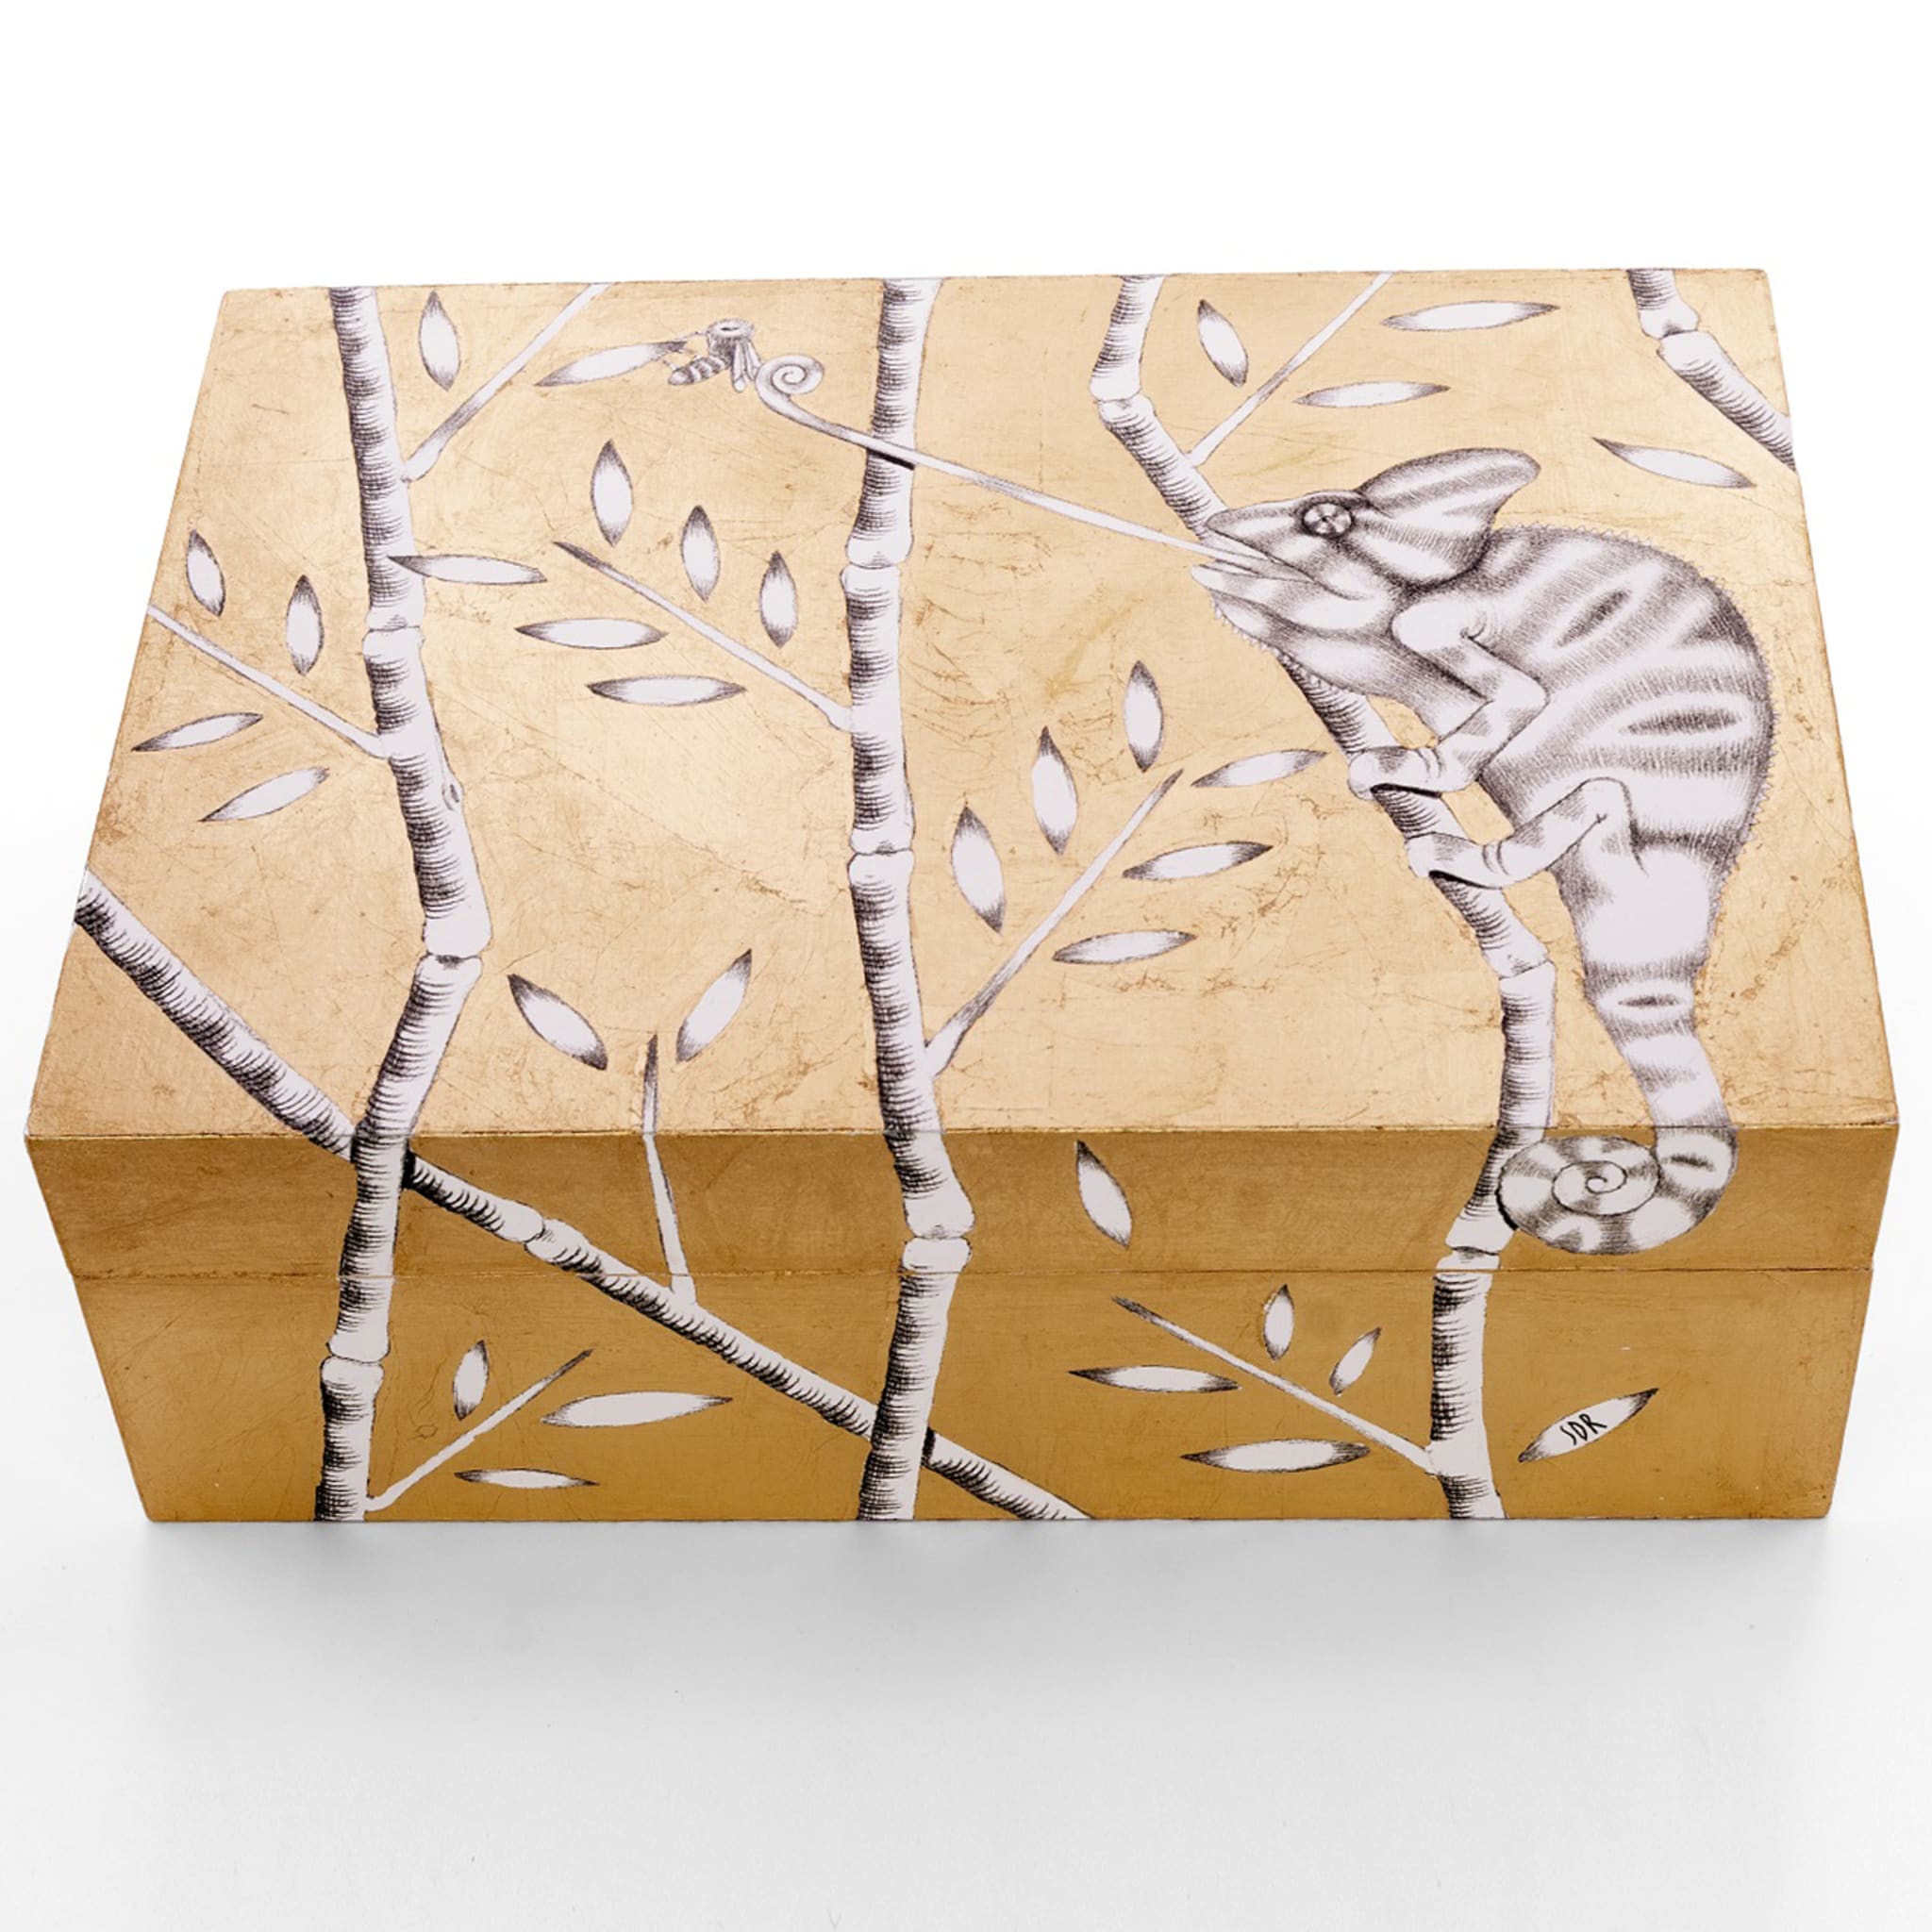 Casarialto Atelier Gold Forest box by Stefania Dei Rossi - Alternative view 1